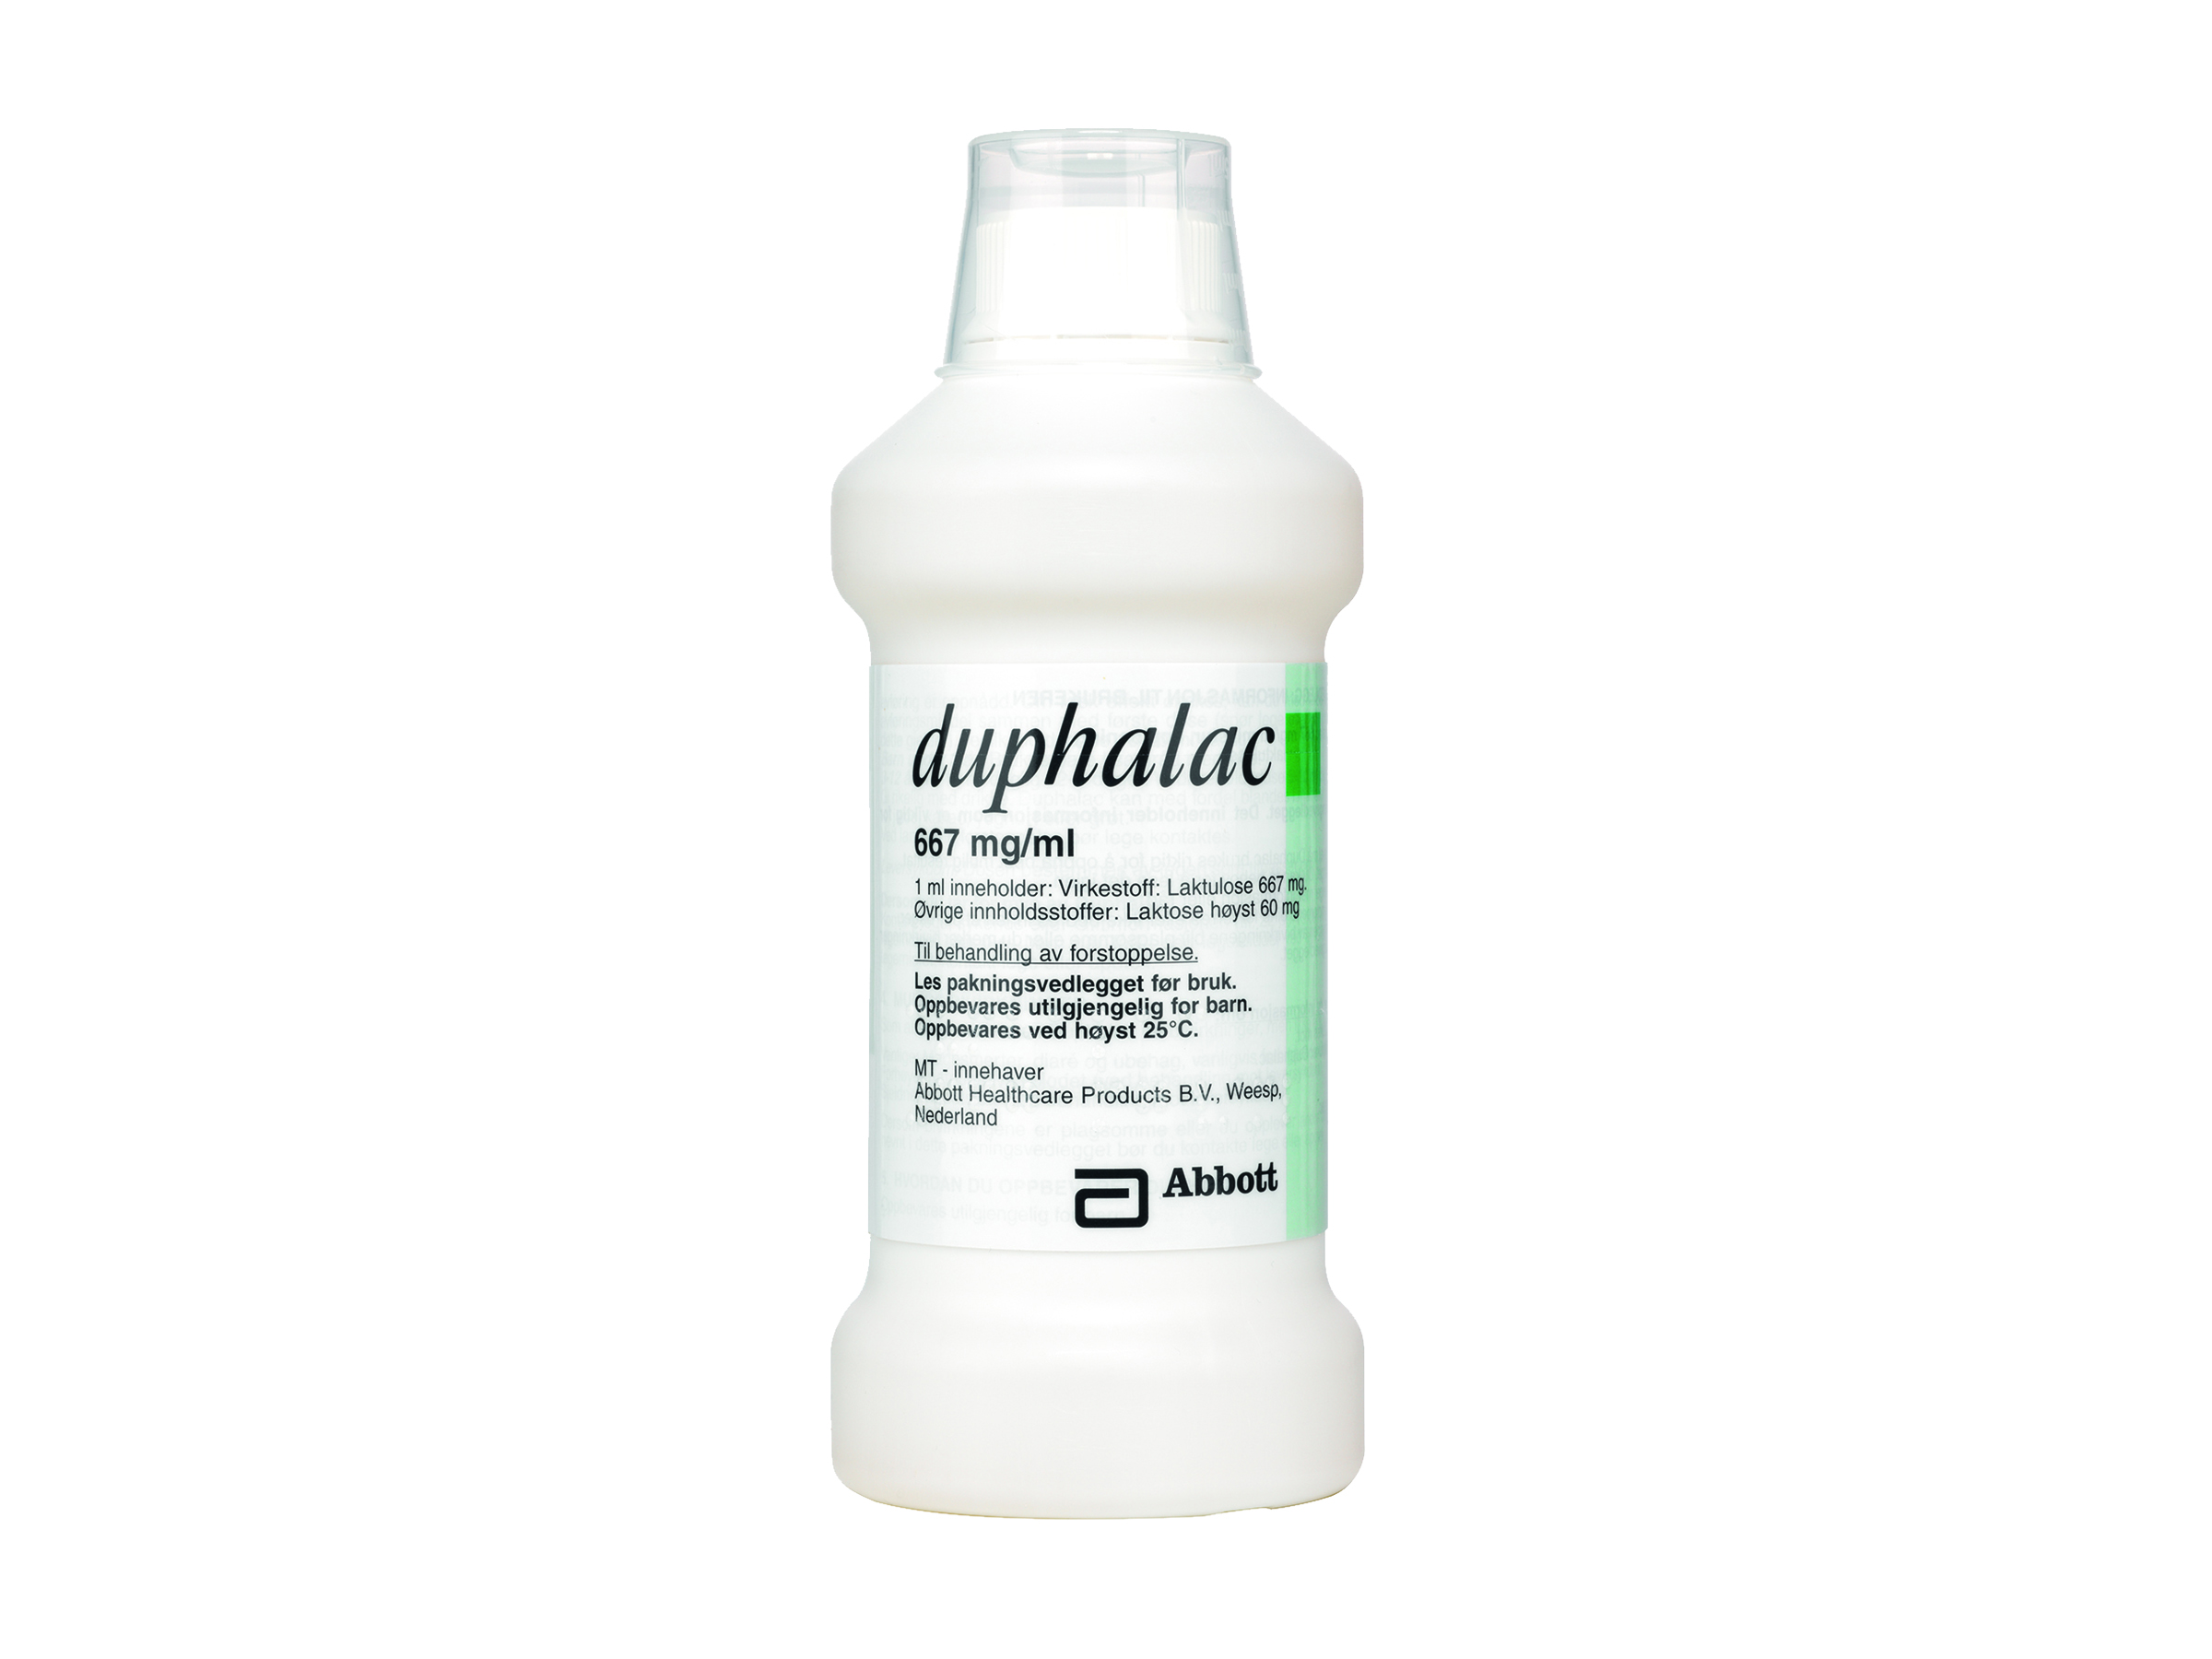 Duphalac Mikstur 667mg/ml, 500 ml.